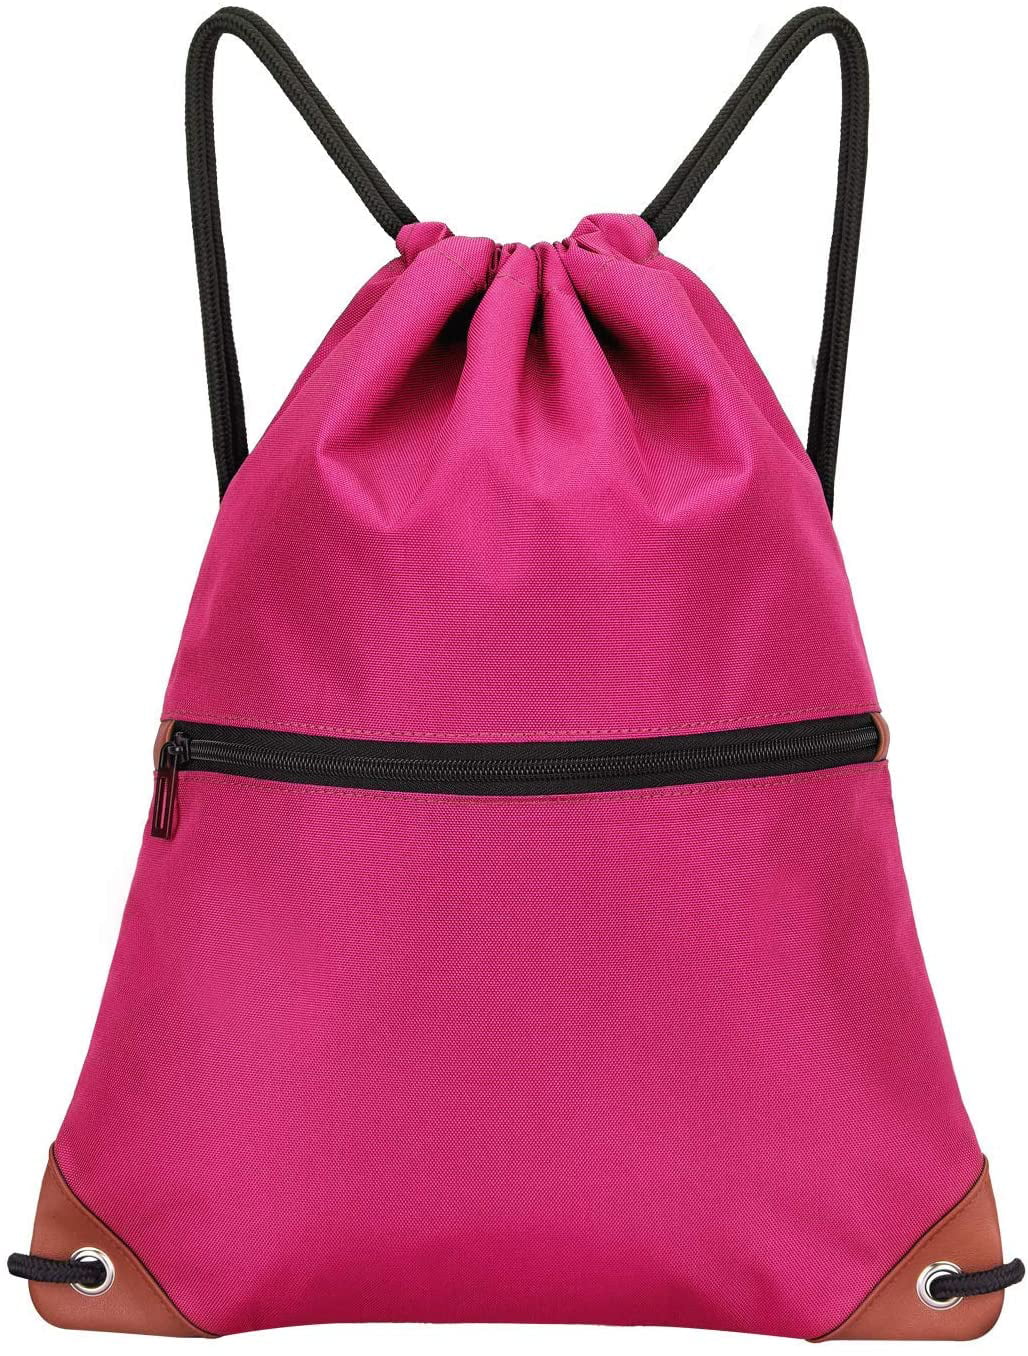 Luxury Matte PU Leather School Bag String Backpack Bookbag Sports Bag Gym Bag 